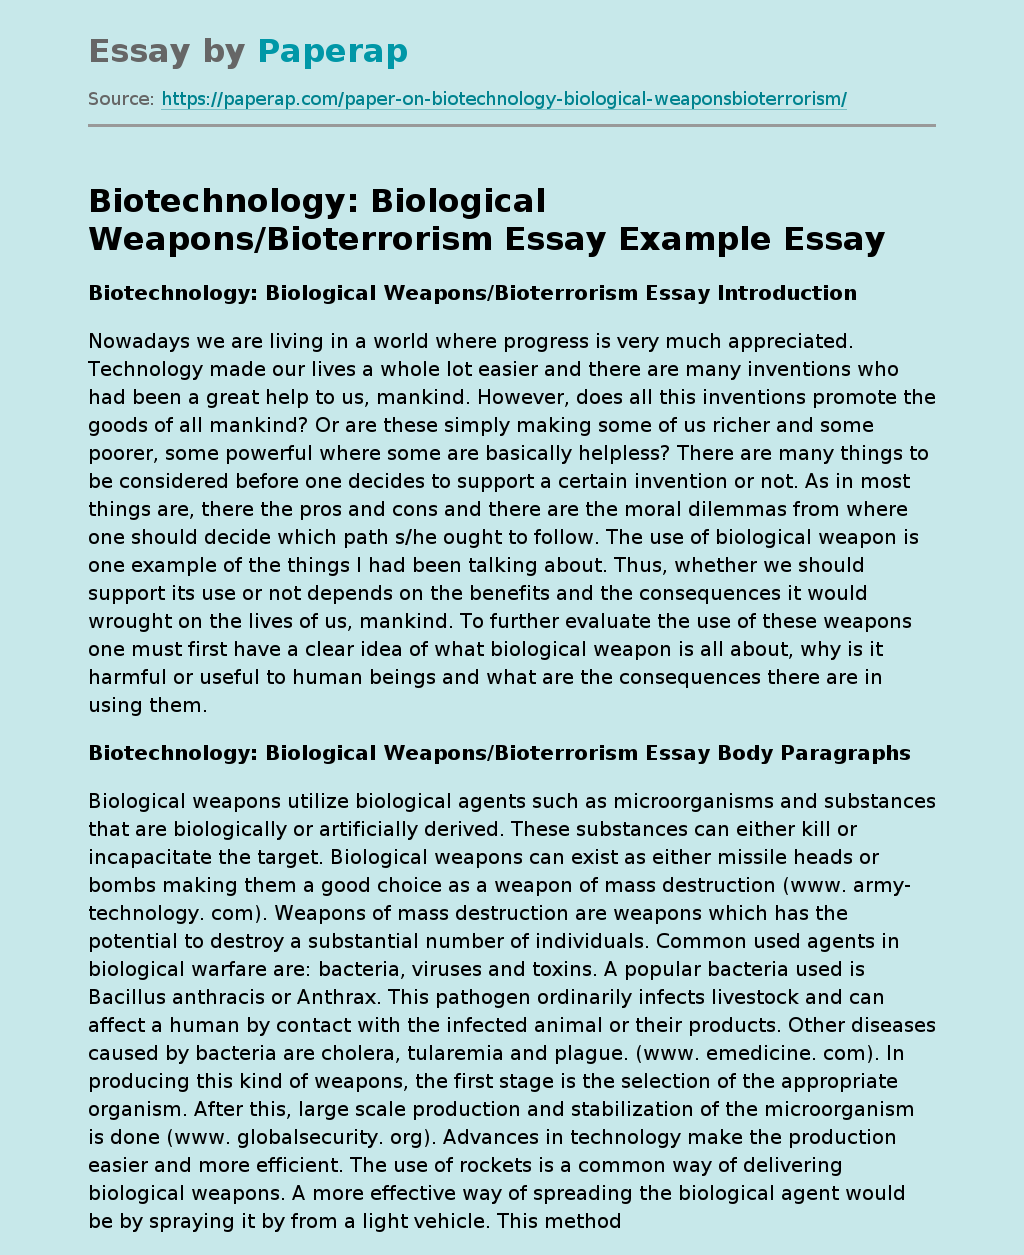 Biotechnology: Biological Weapons/Bioterrorism